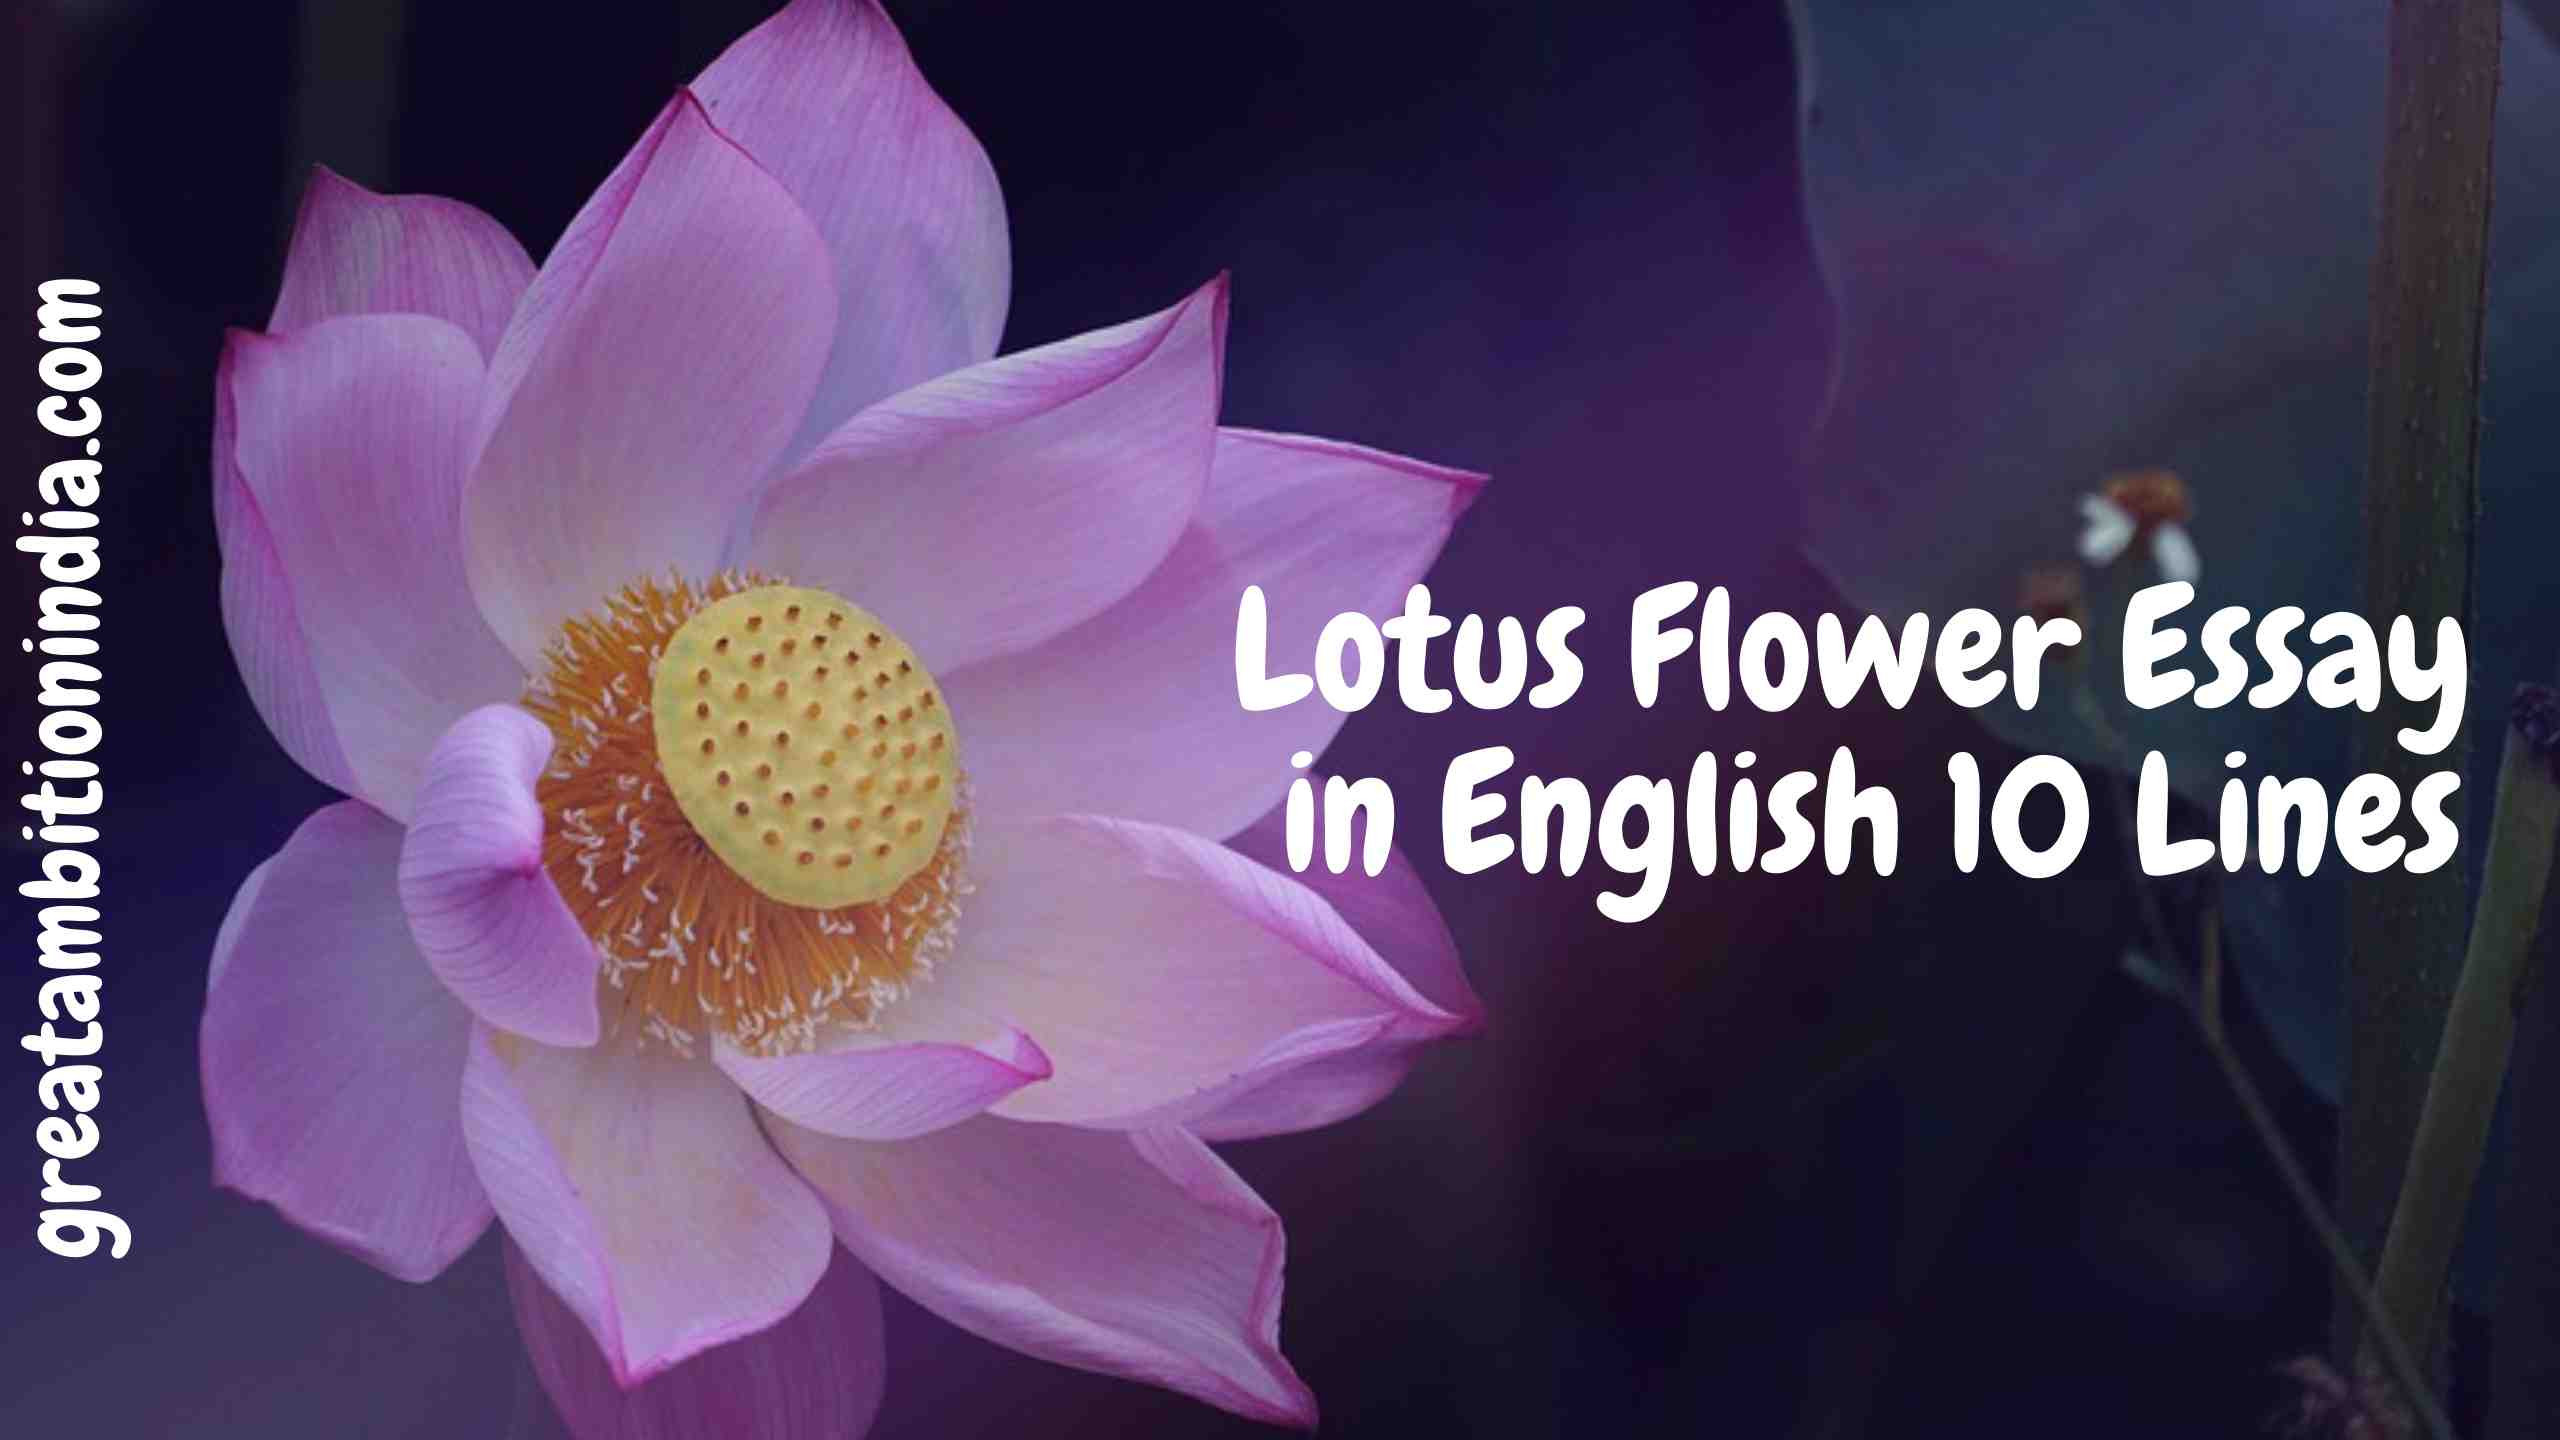 Lotus Flower Essay in English 10 Lines || Lotus Flower || Short Essay on Lotus Flower